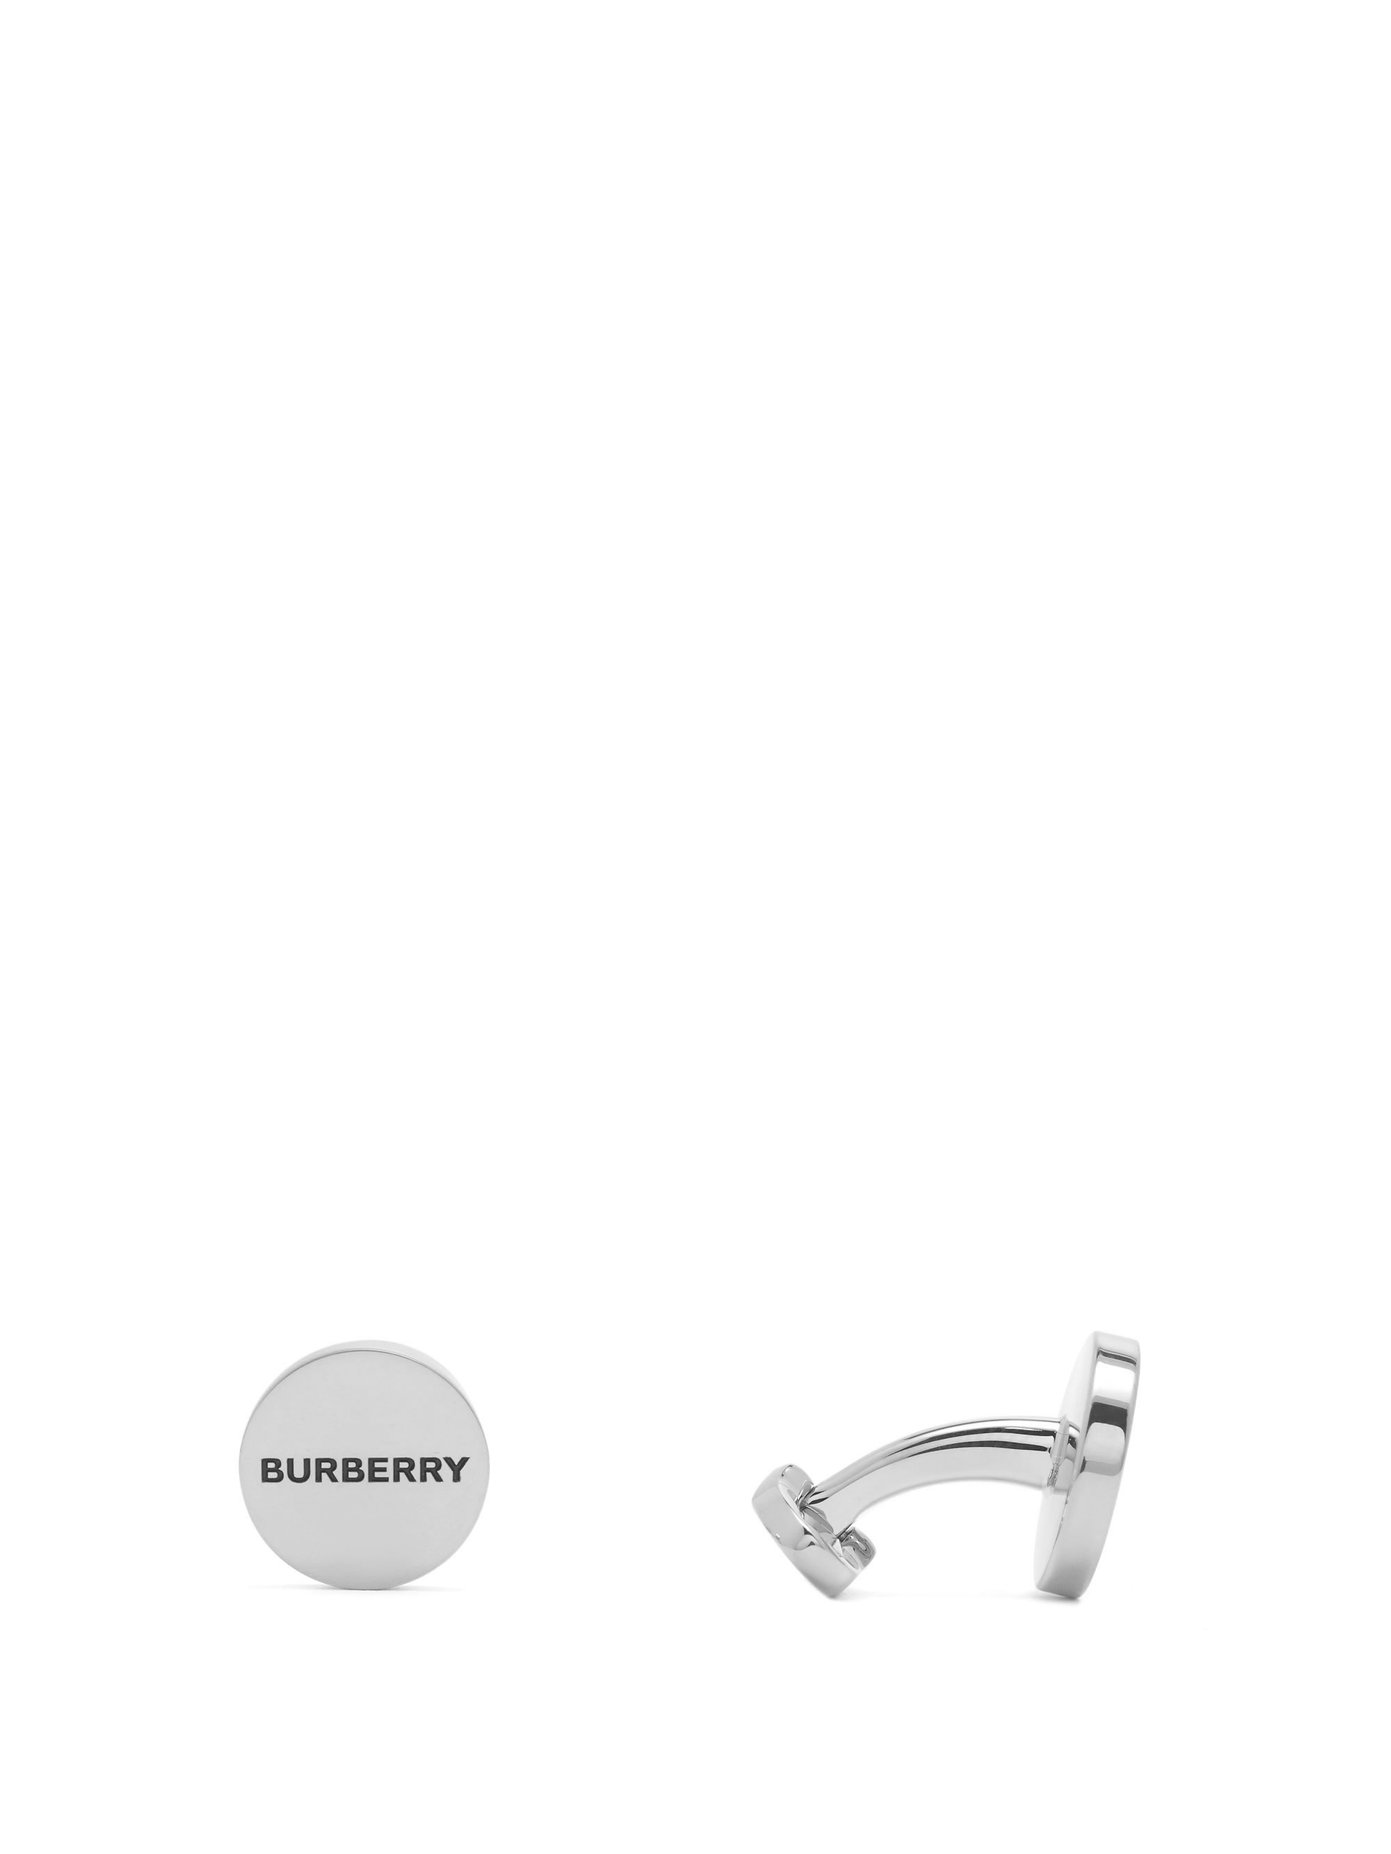 burberry cufflinks